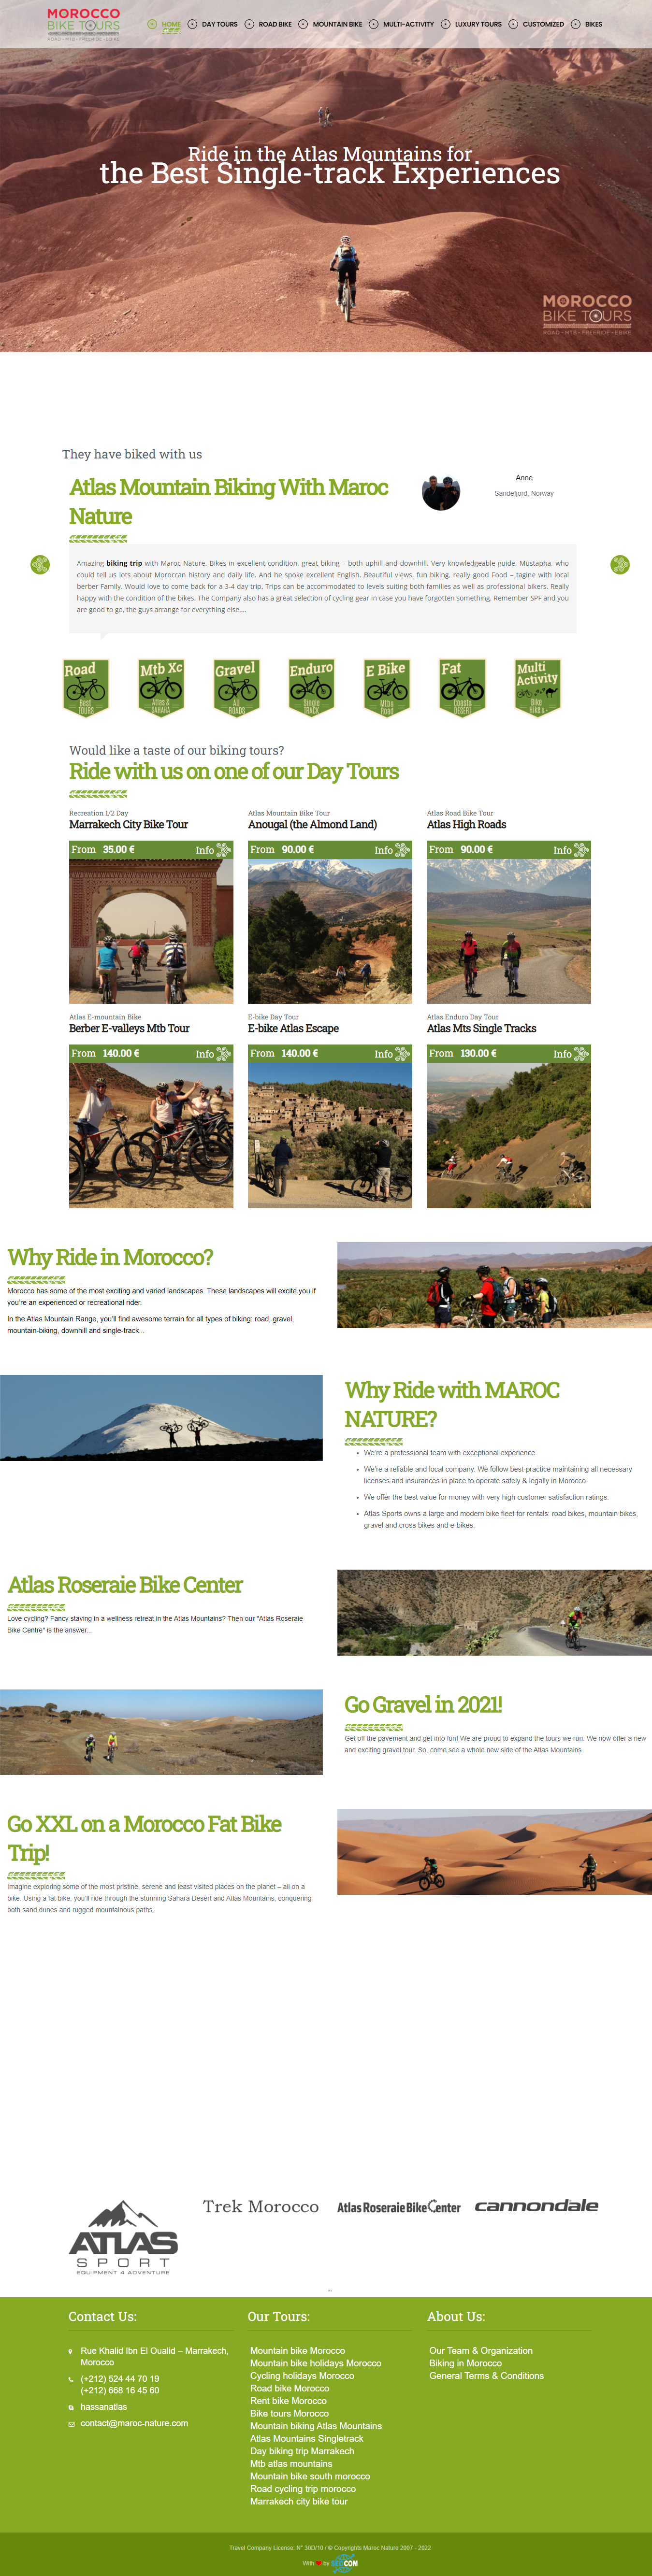 Morocco bike tours